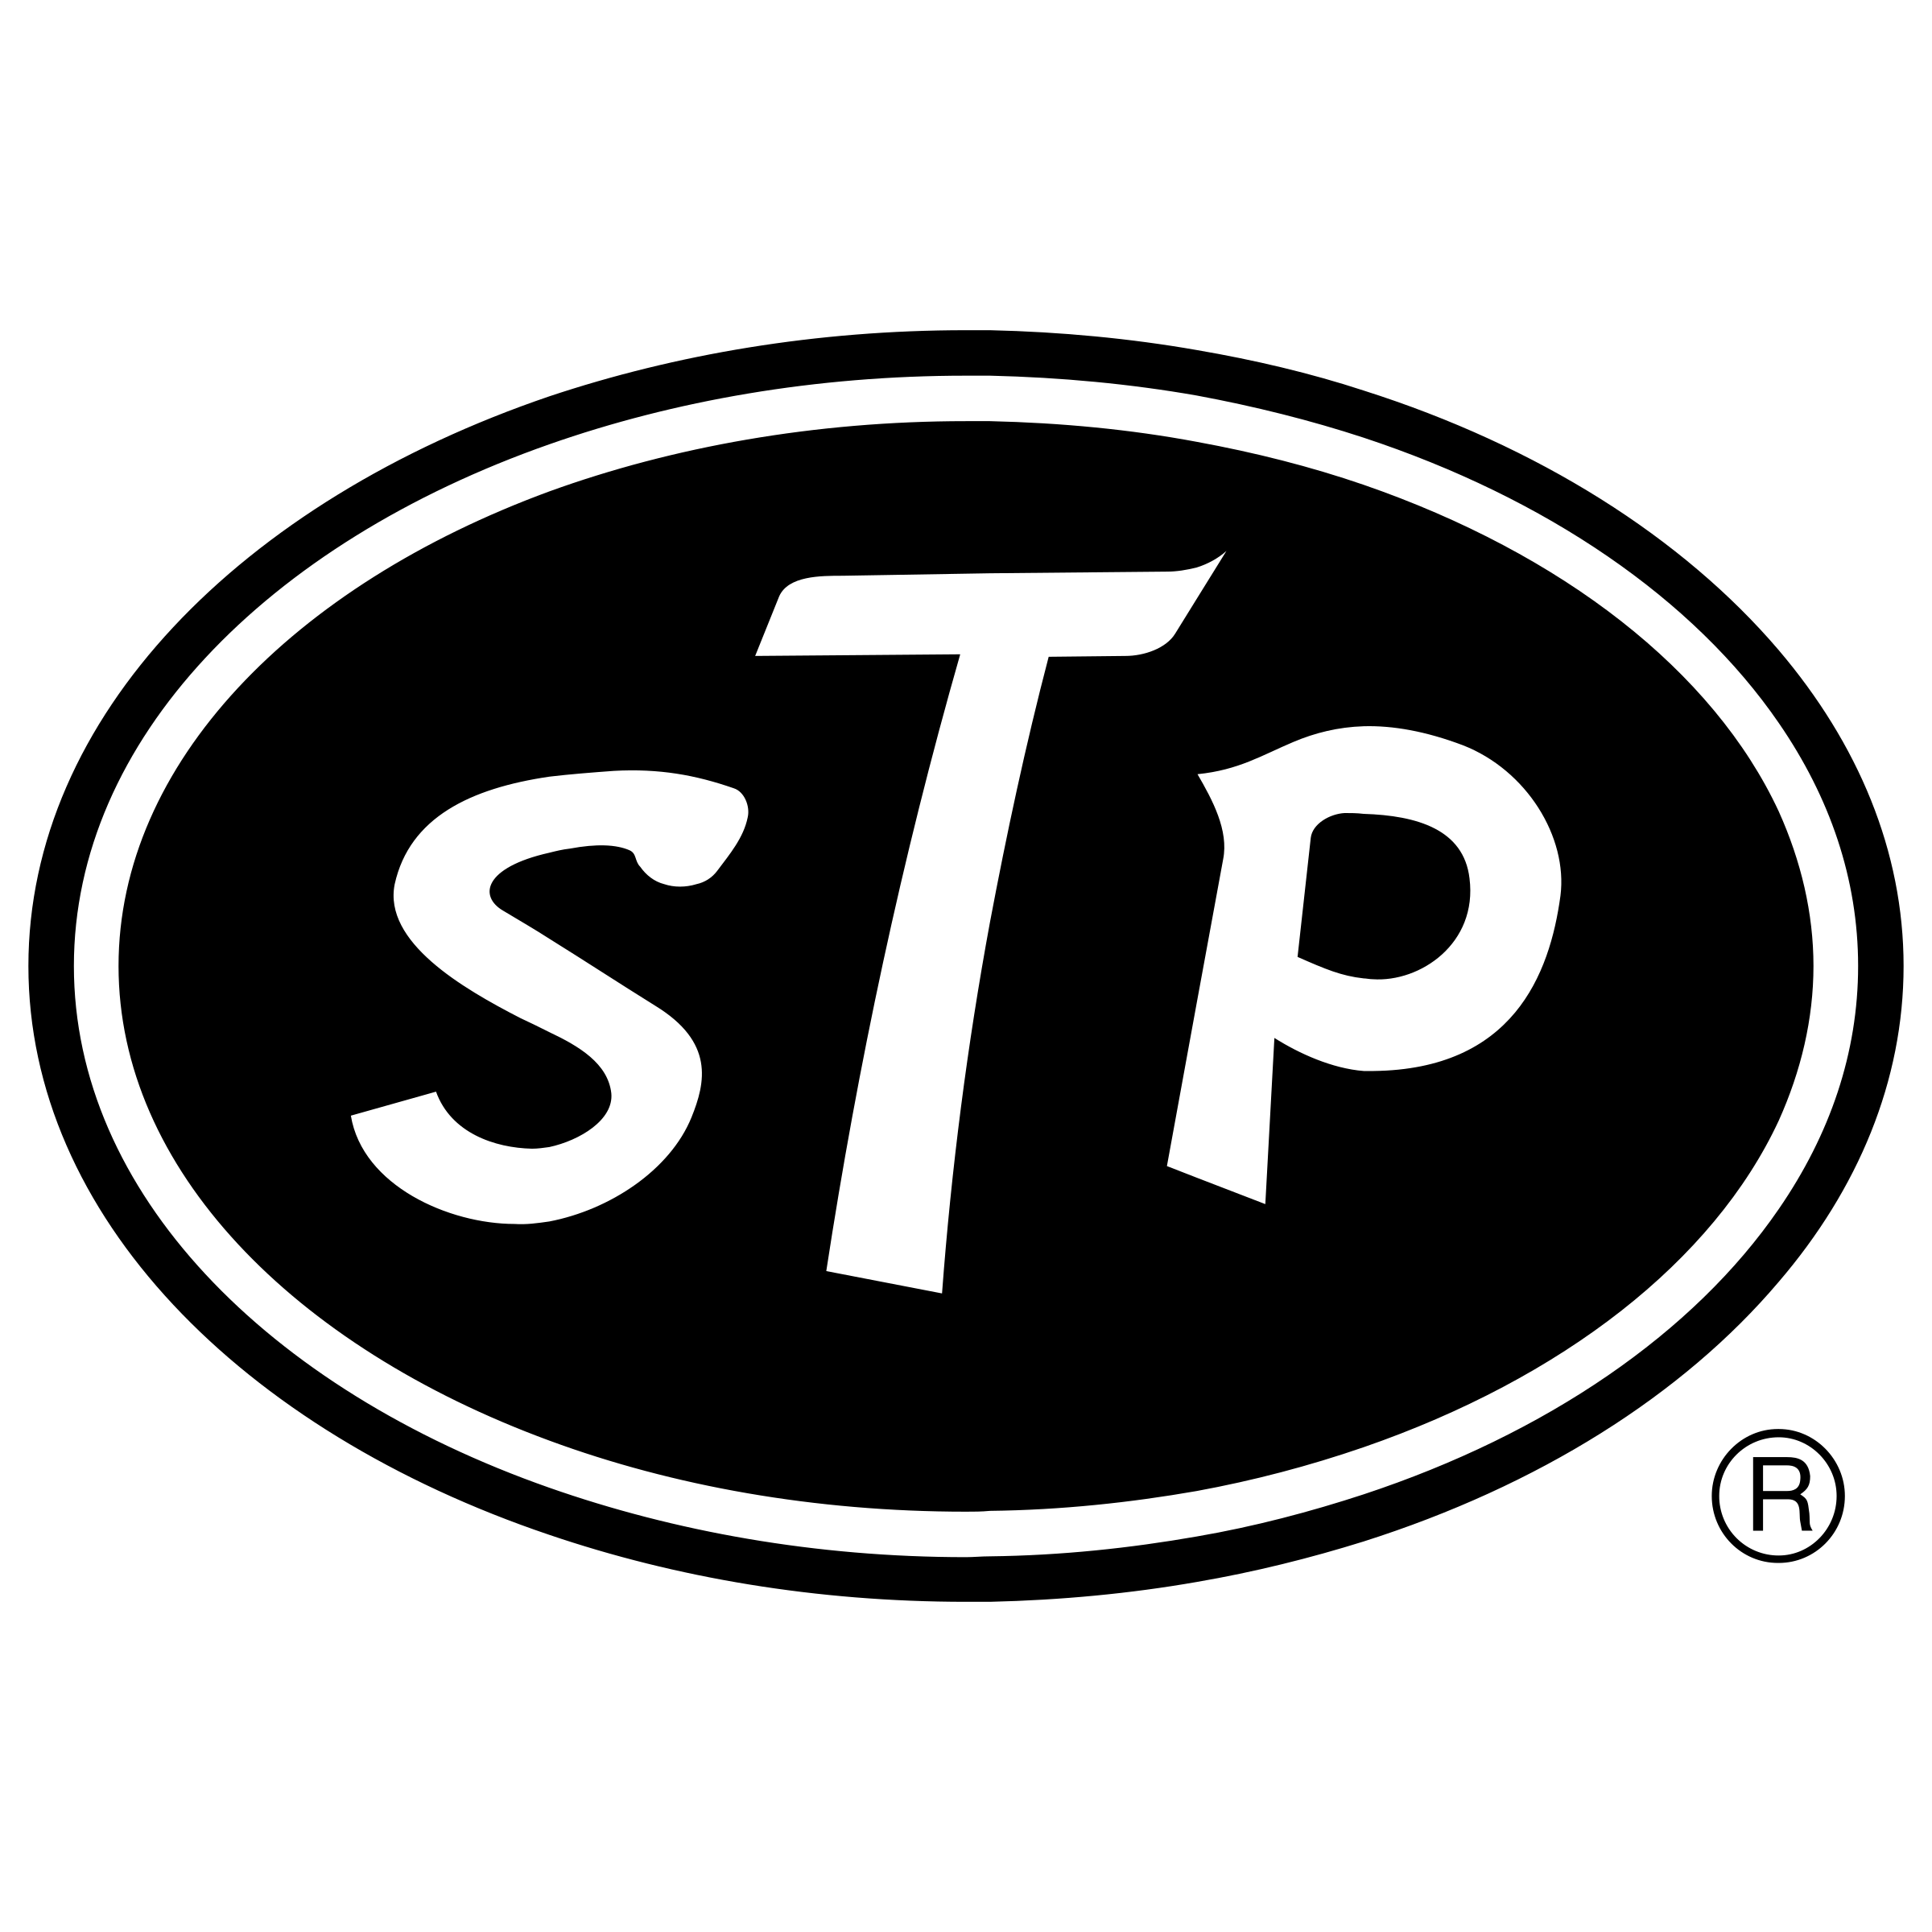 STP Logo - STP Logo PNG Transparent & SVG Vector